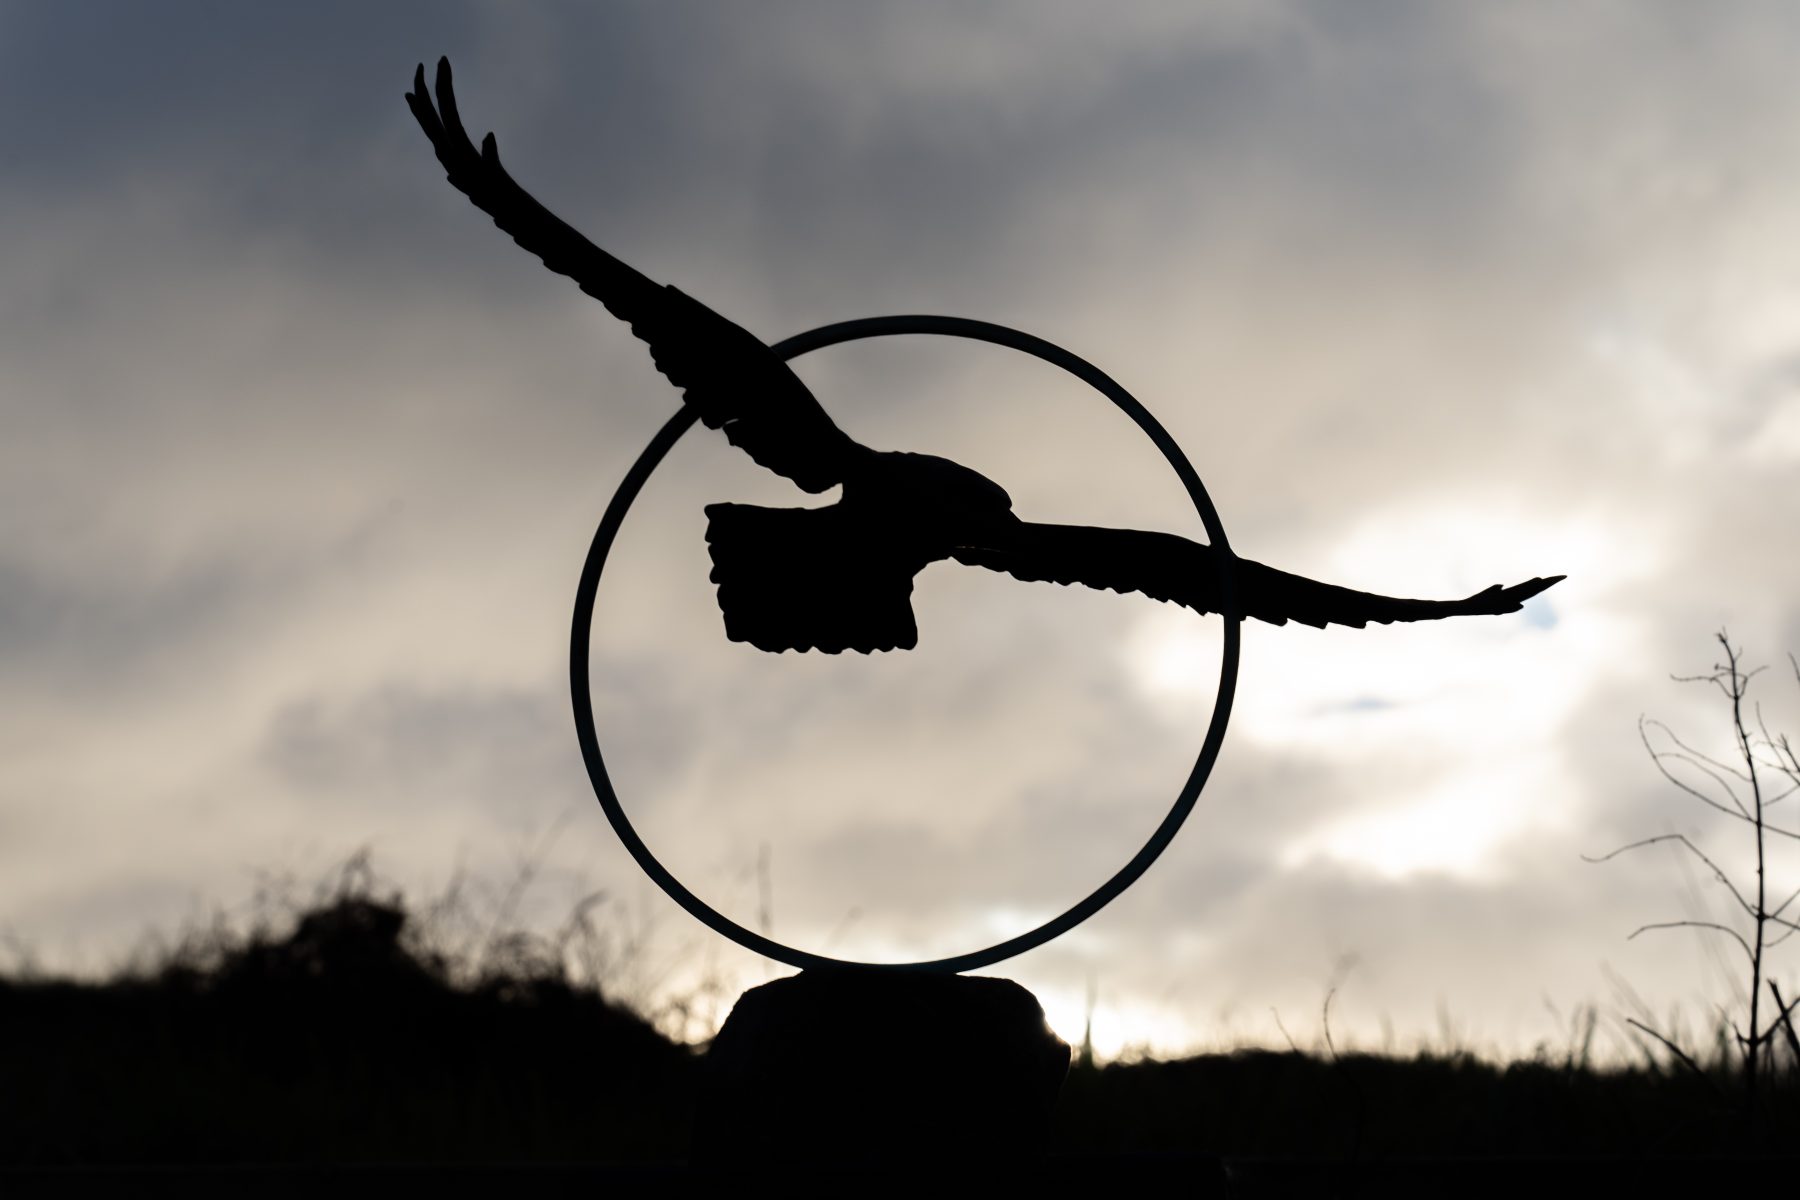 Adam Pomeroy Bronze Raven in Flight edition beautiful sculpture extraordinary detail collectable piece Adam Pomeroy Kilbaha Gallery Interiors Irish art